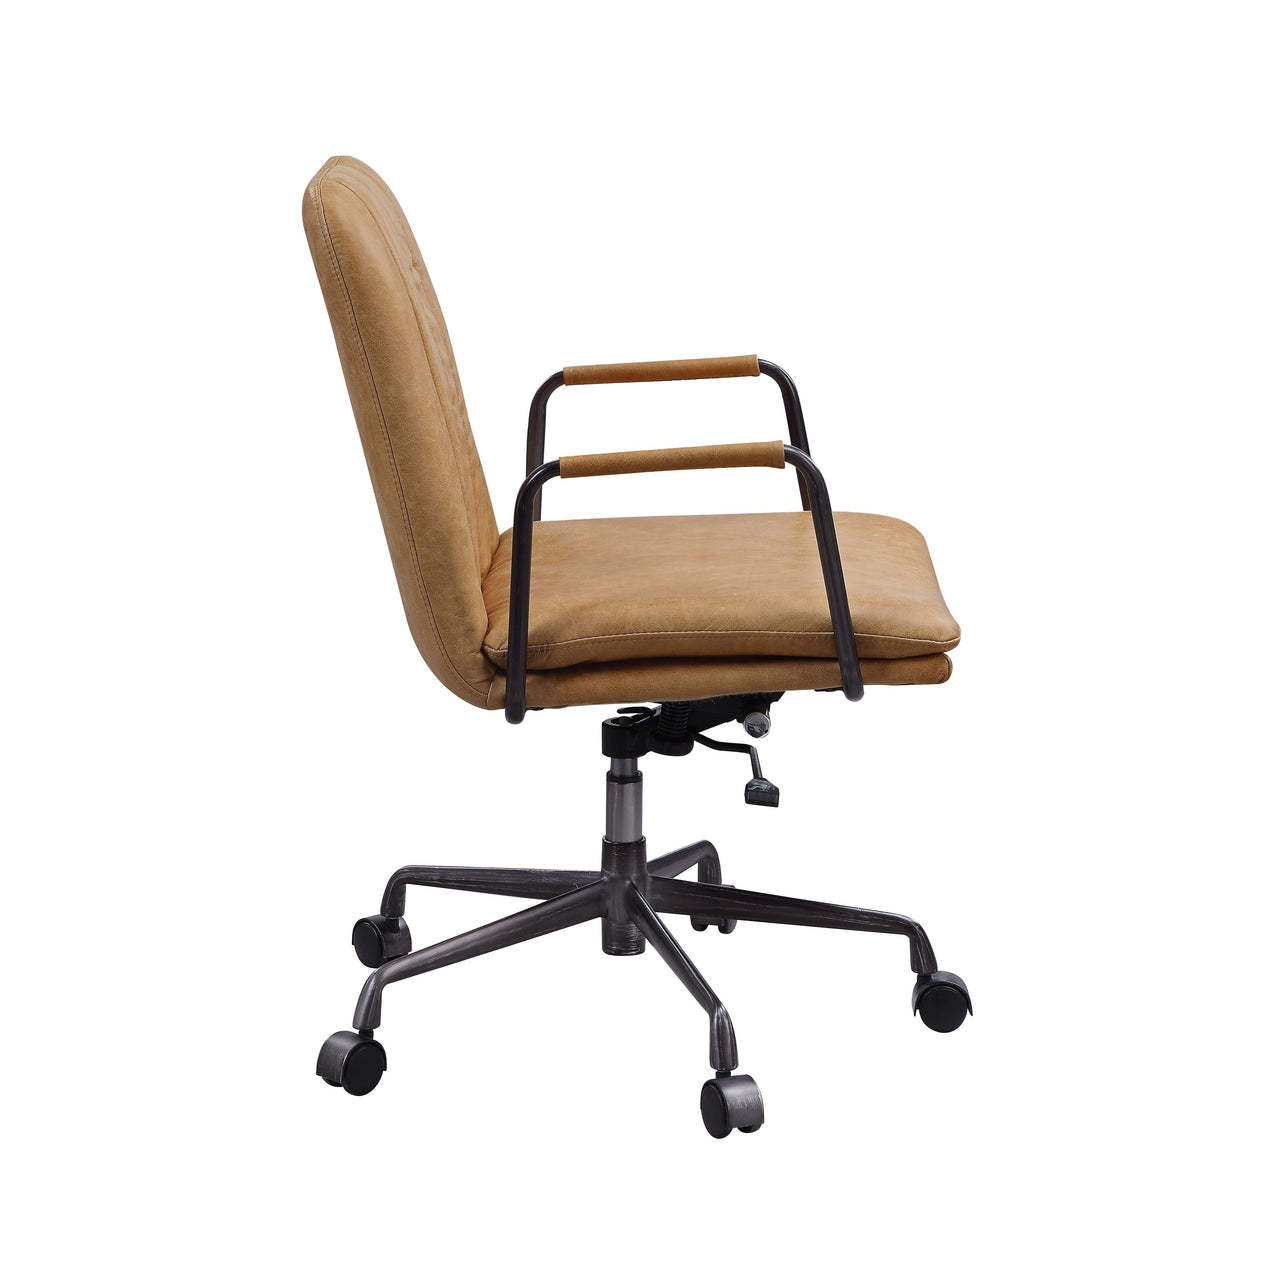 Eclarn - Office Chair - Tony's Home Furnishings